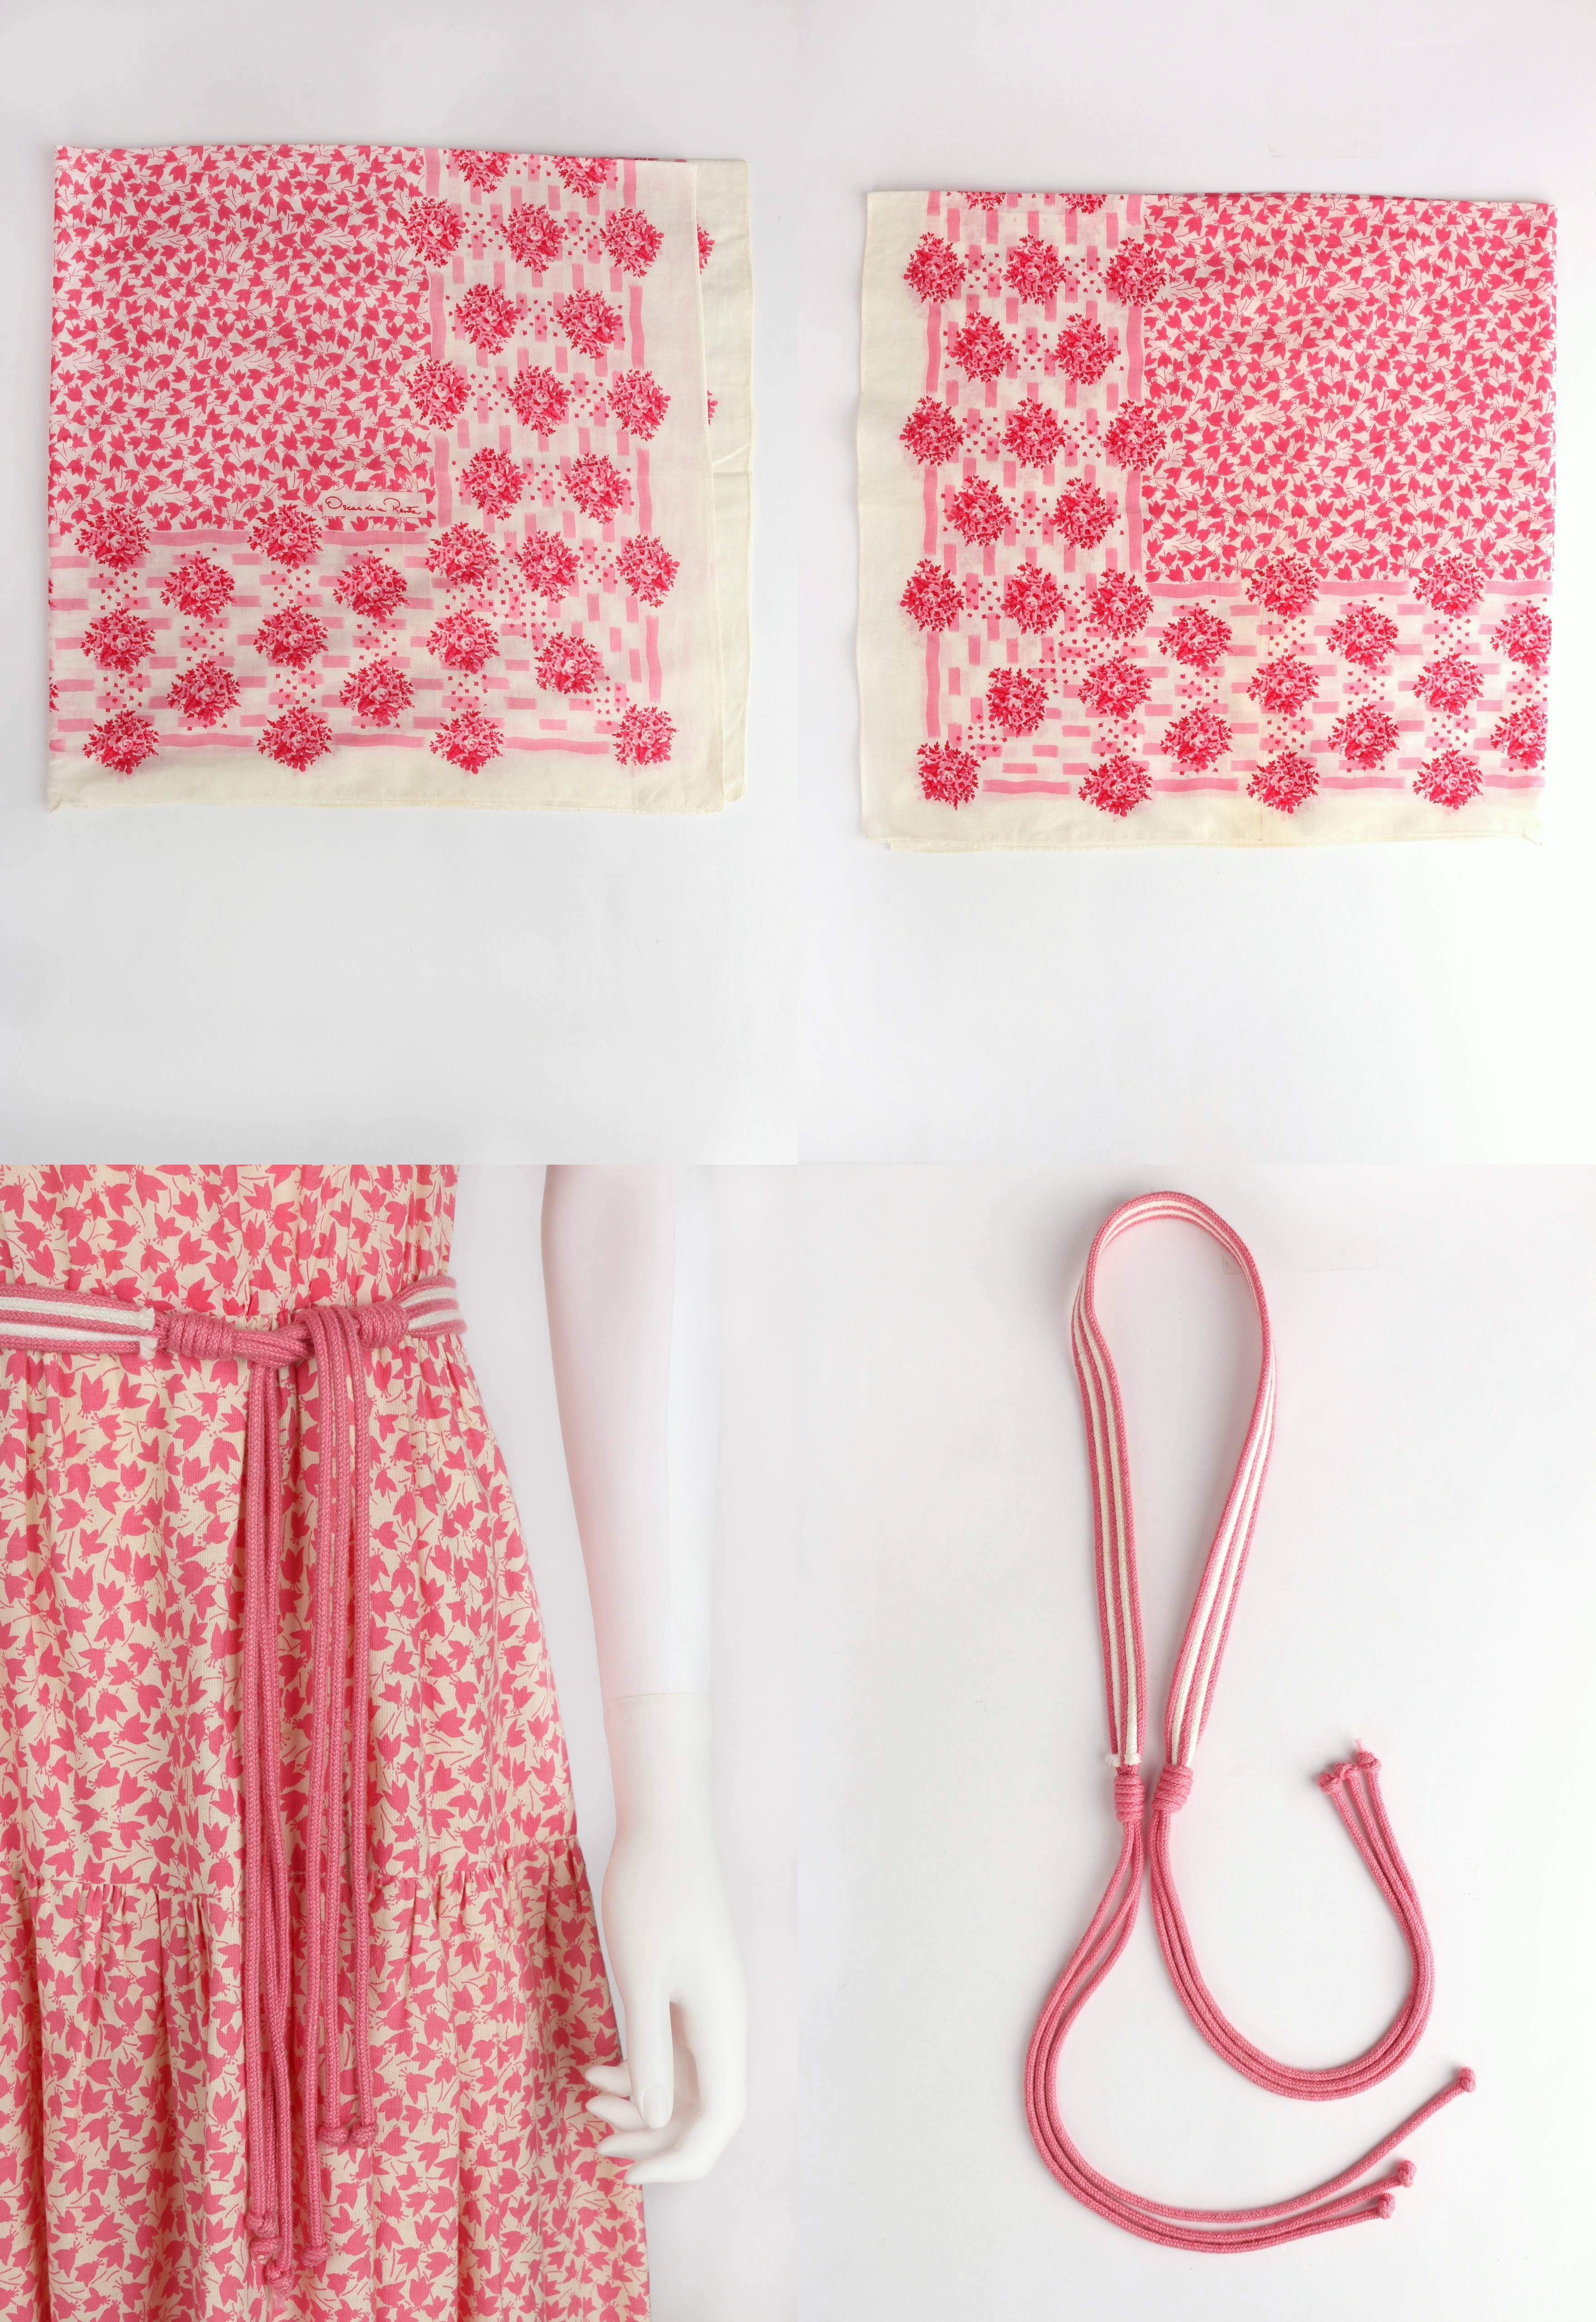 OSCAR de la RENTA 1970s Ivory Pink Floral Cotton Sundress Top Scarf Belt Set 6 7